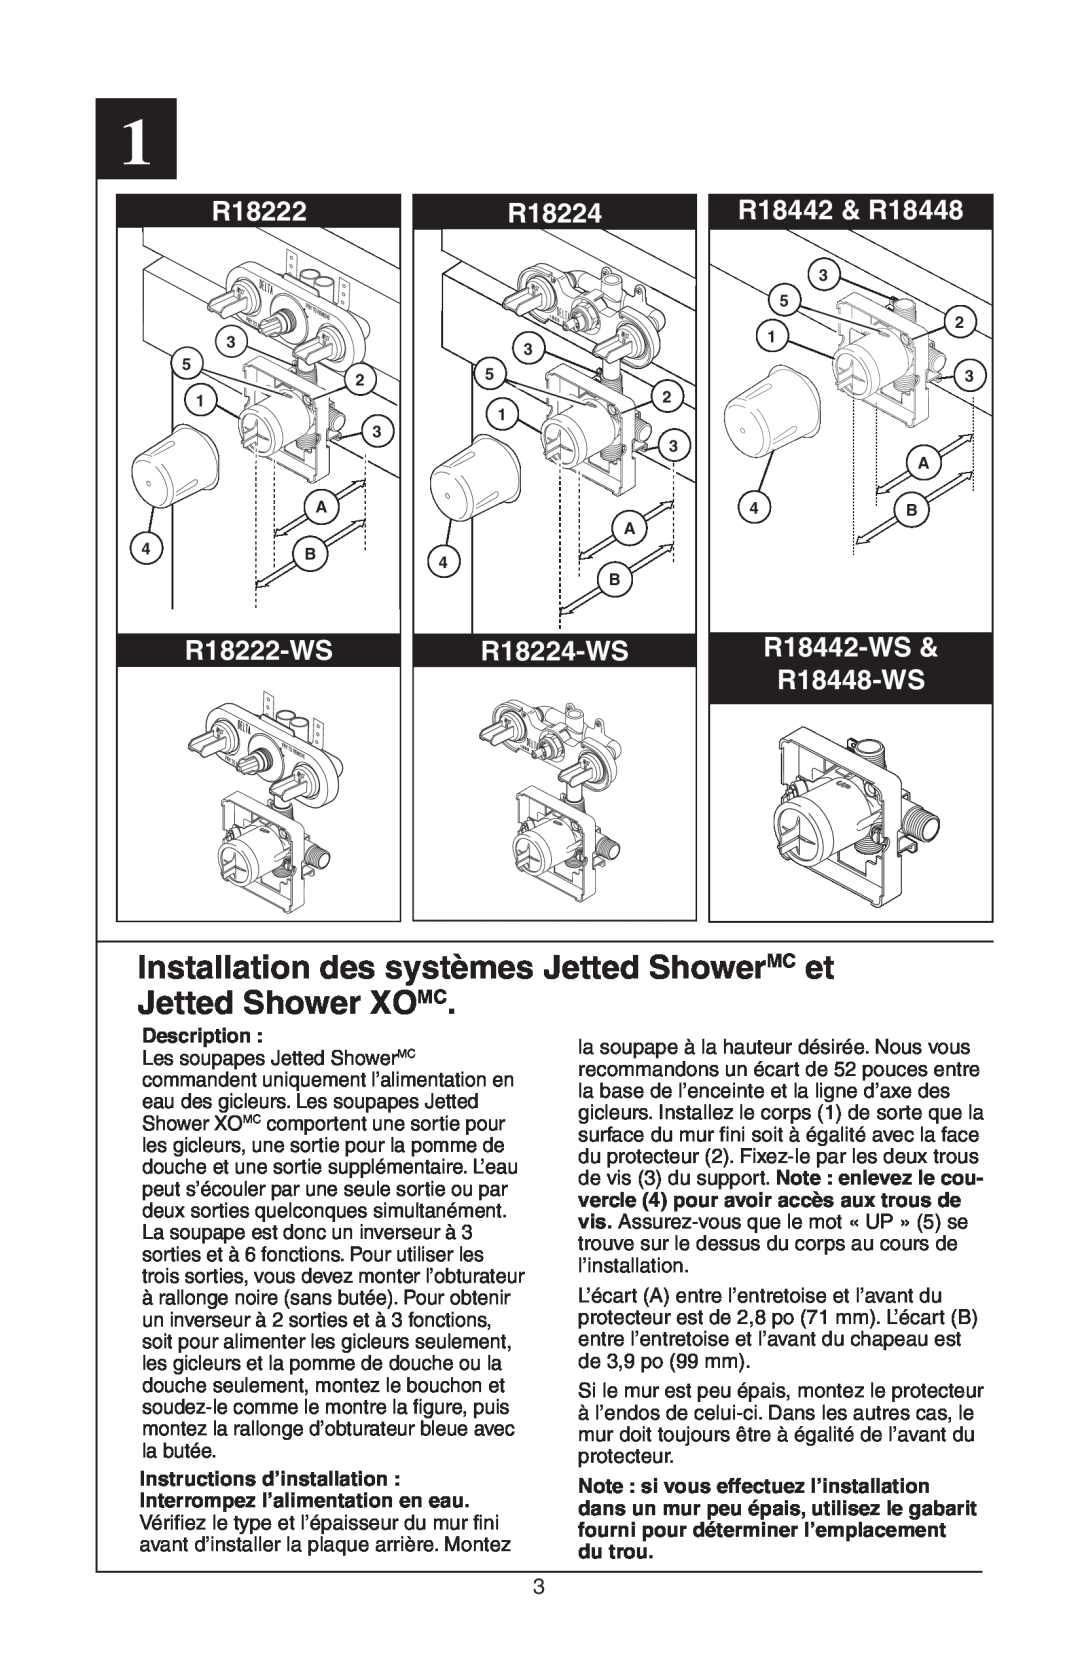 Delta R18448 Installation des systèmes Jetted ShowerMC et Jetted Shower XOMC, R18222-WS, R18224-WS, Description 